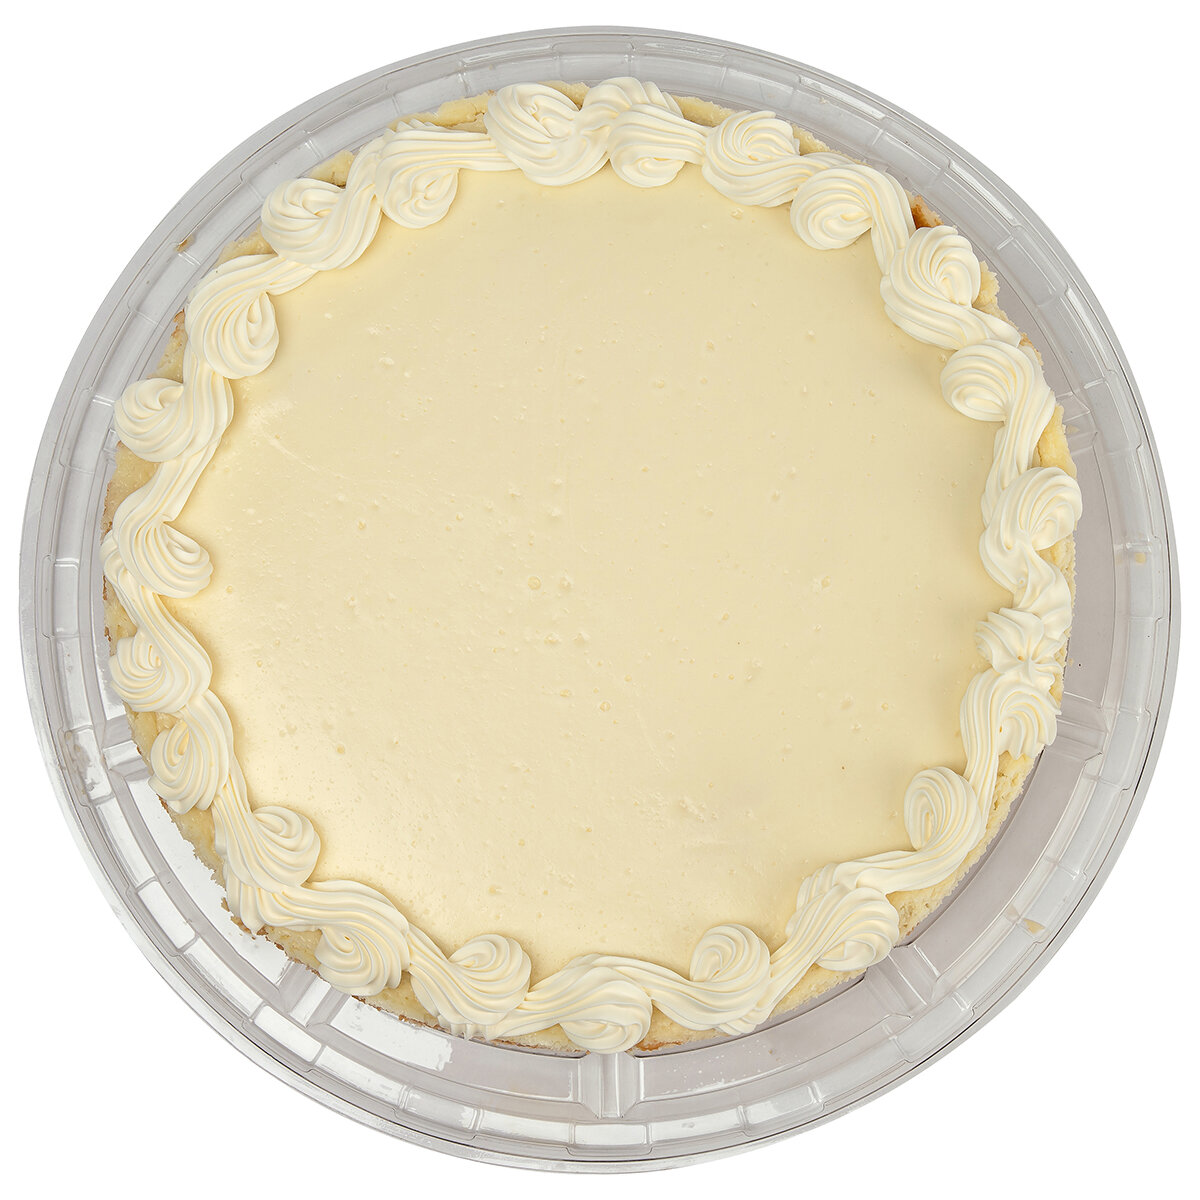 Kirkland Signature Plain Cheesecake 1.8kg